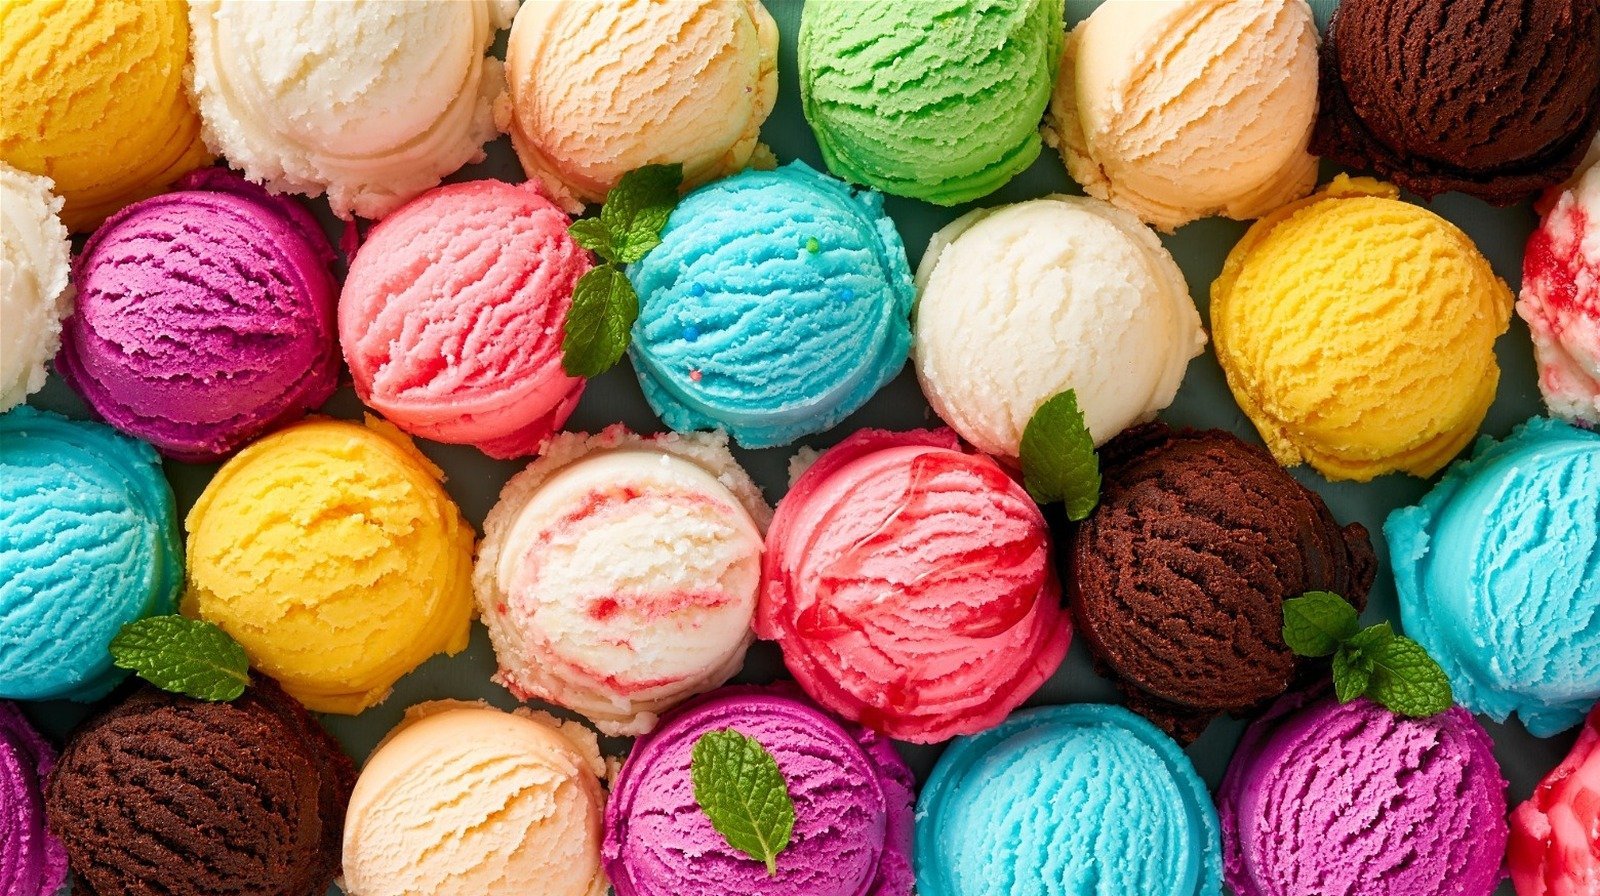 30 Best Ice Cream Flavors Ranked From Worst To Best Flipboard